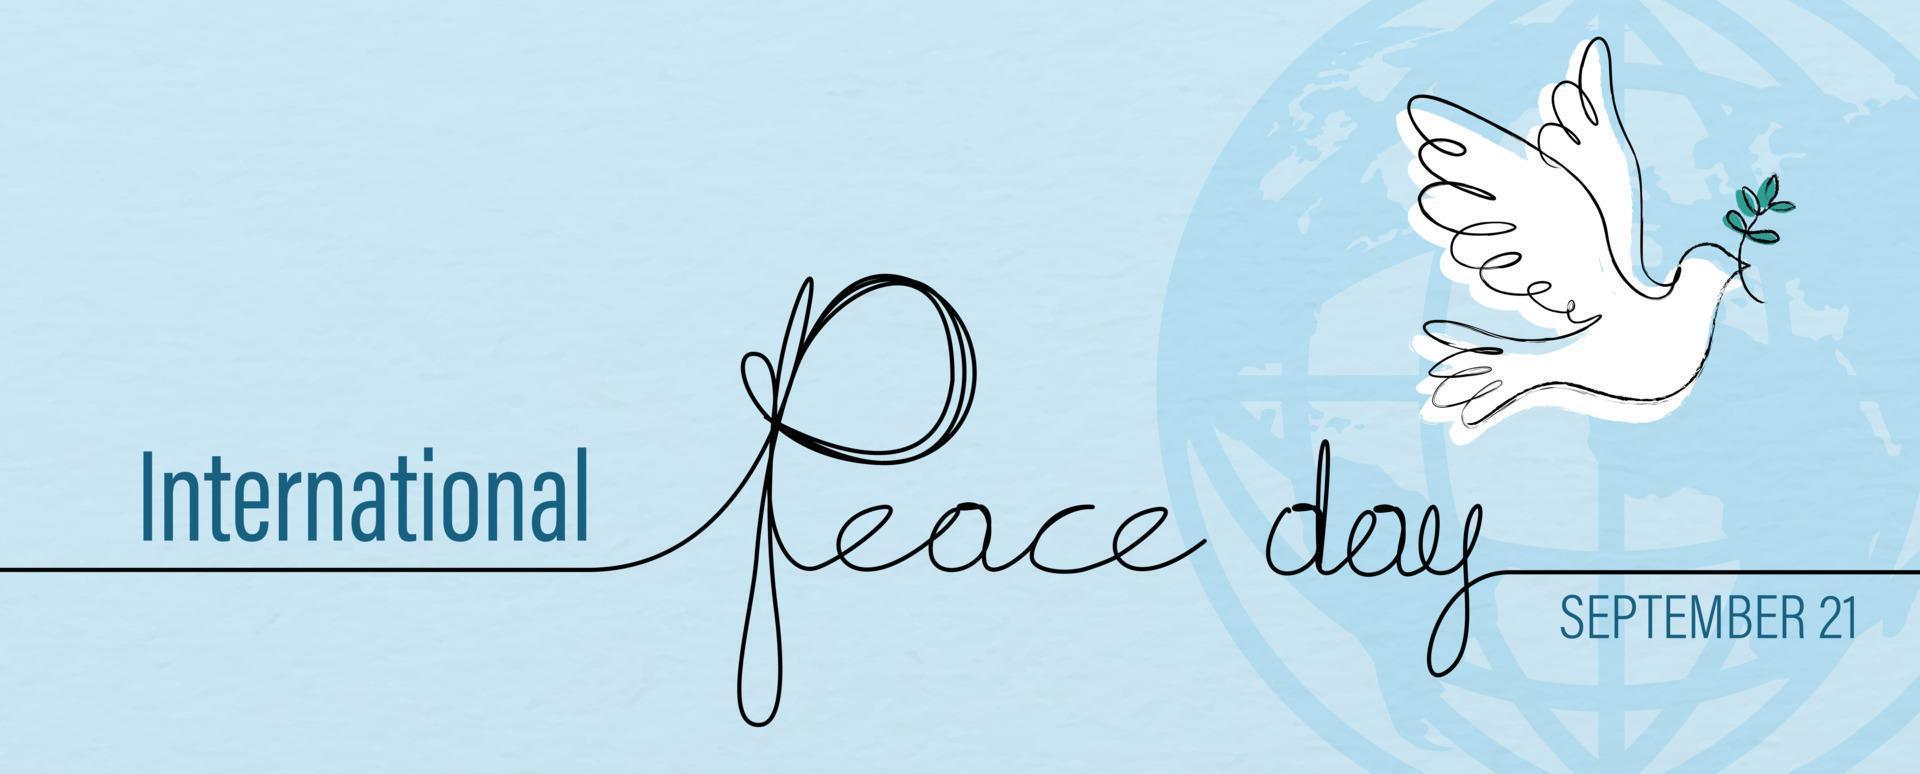 hand dra och ett linje stil i en fred duva form med de namn av händelse text på global ikon och blå bakgrund. affisch begrepp av fred dag kampanj i baner och vektor design.